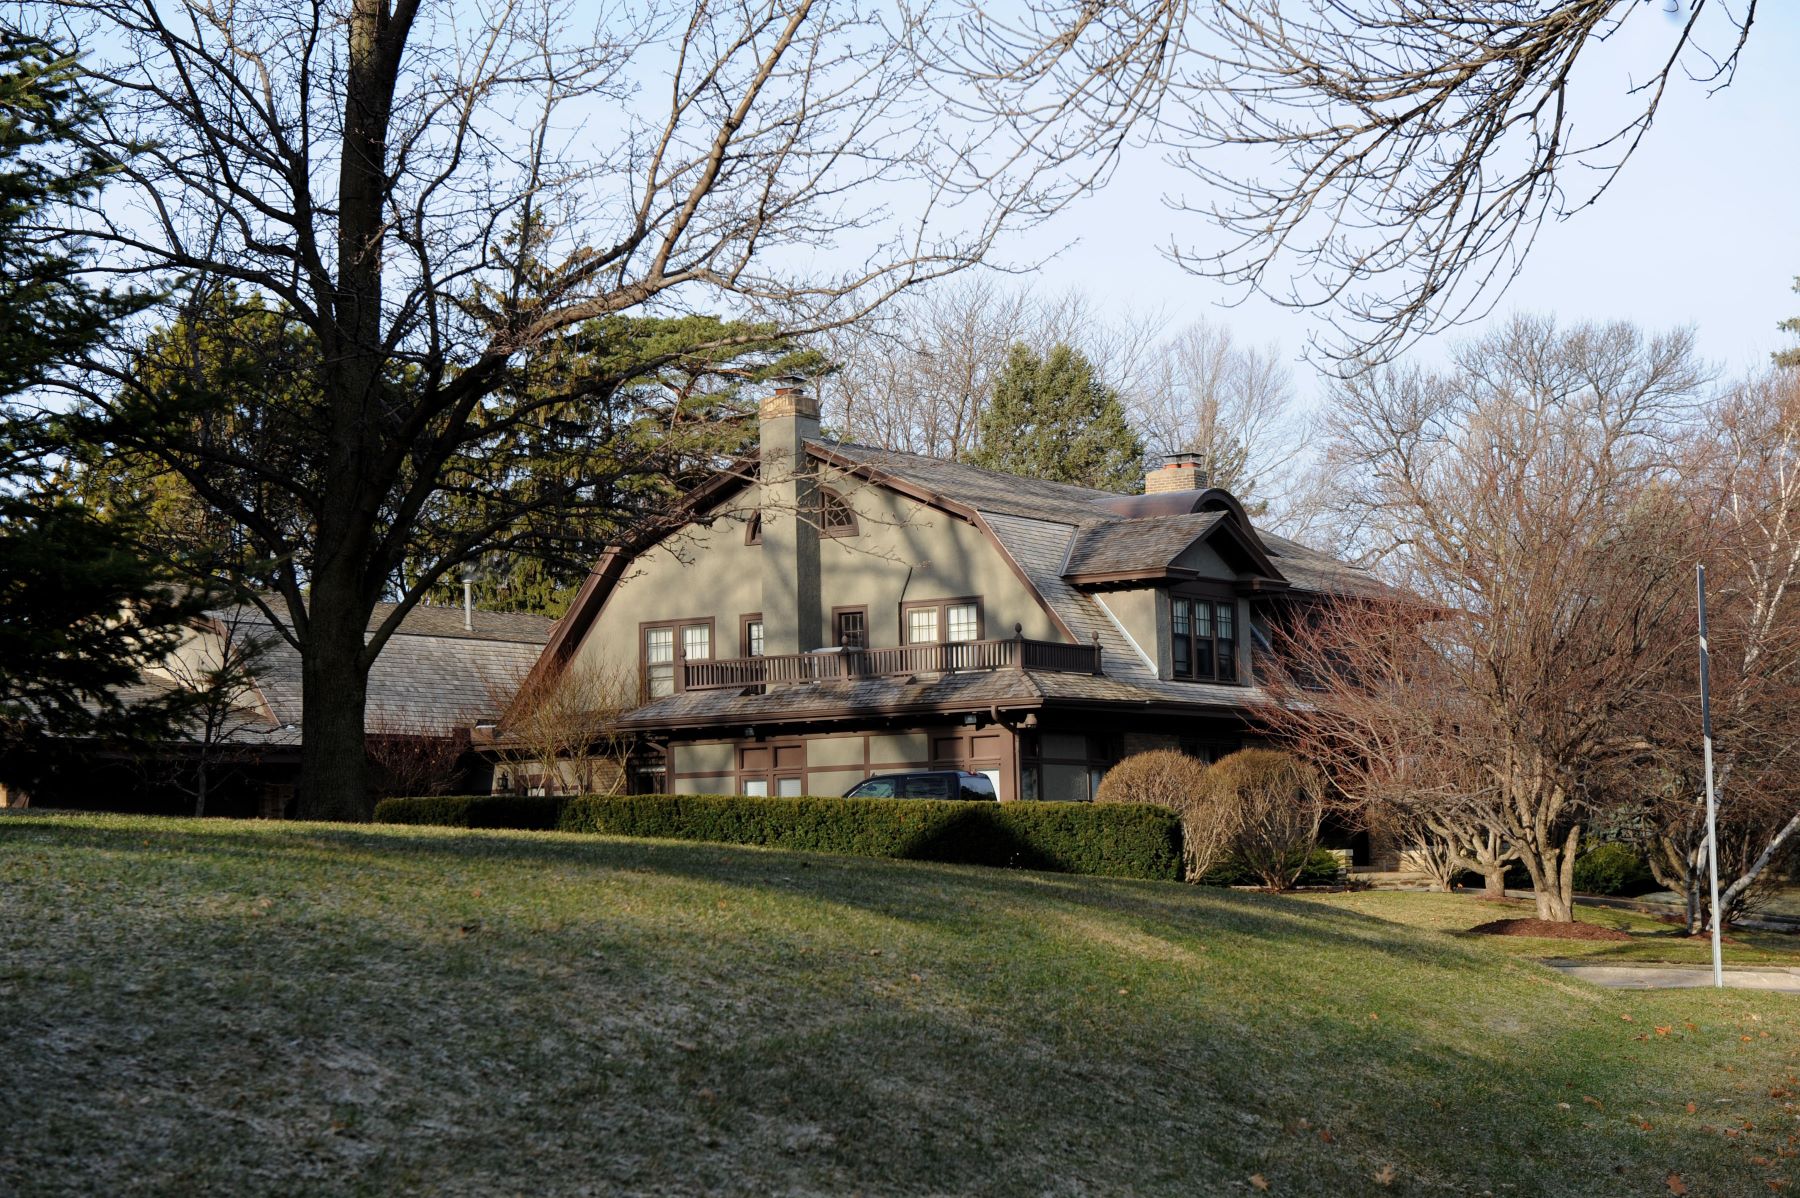 Warren Buffet's home valued at $652,619 located in Omaha, Nebraska